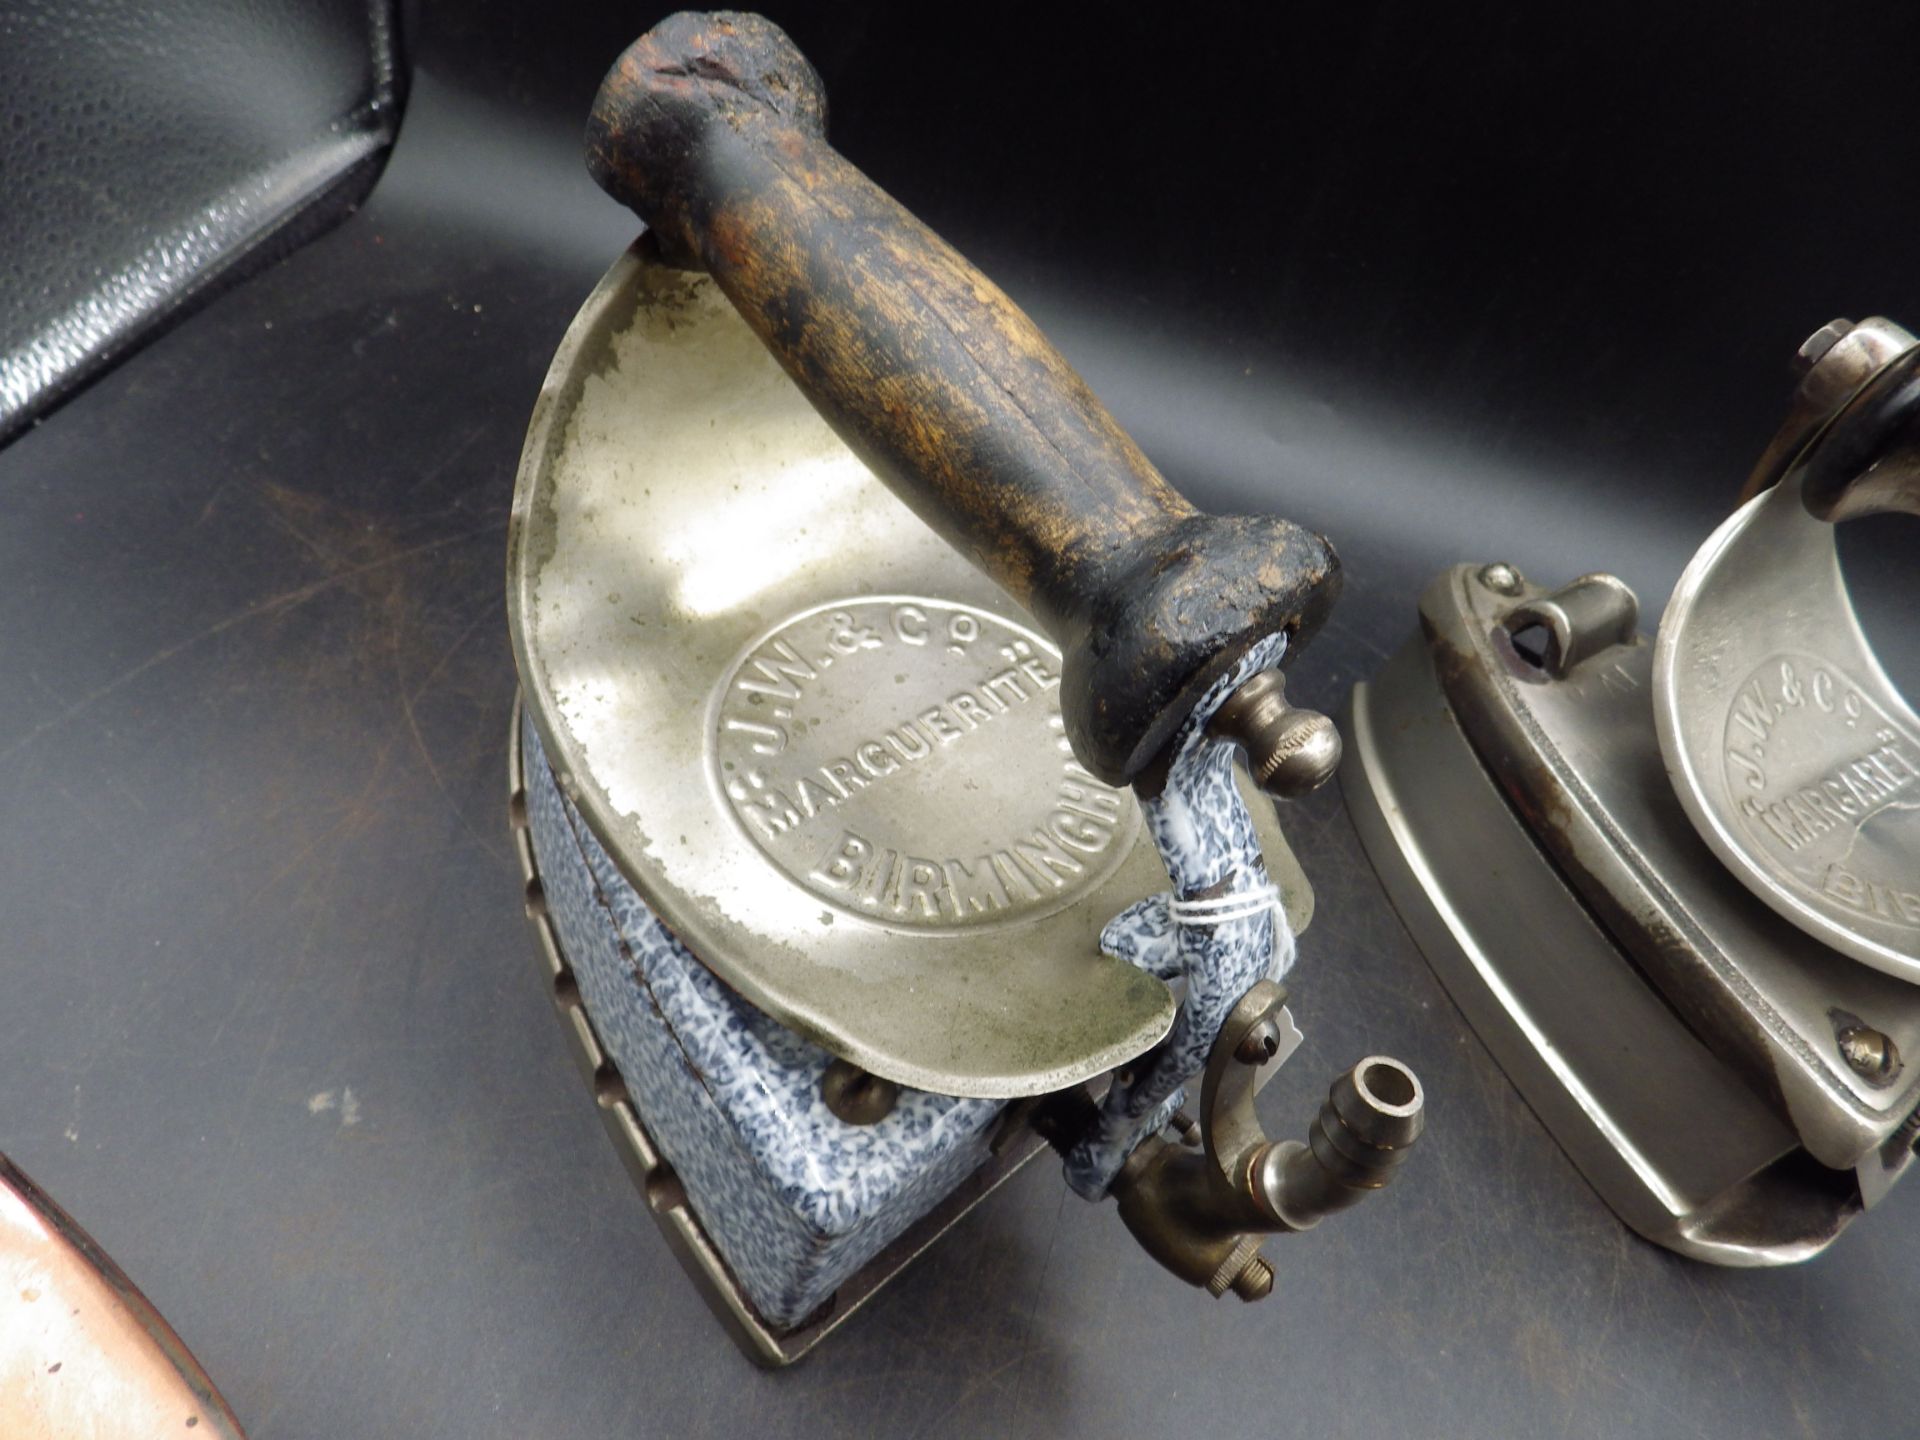 3 John Wright & Co Ltd Birmingham gas irons to incl Marguerite black enamel model with copper heat - Image 3 of 4